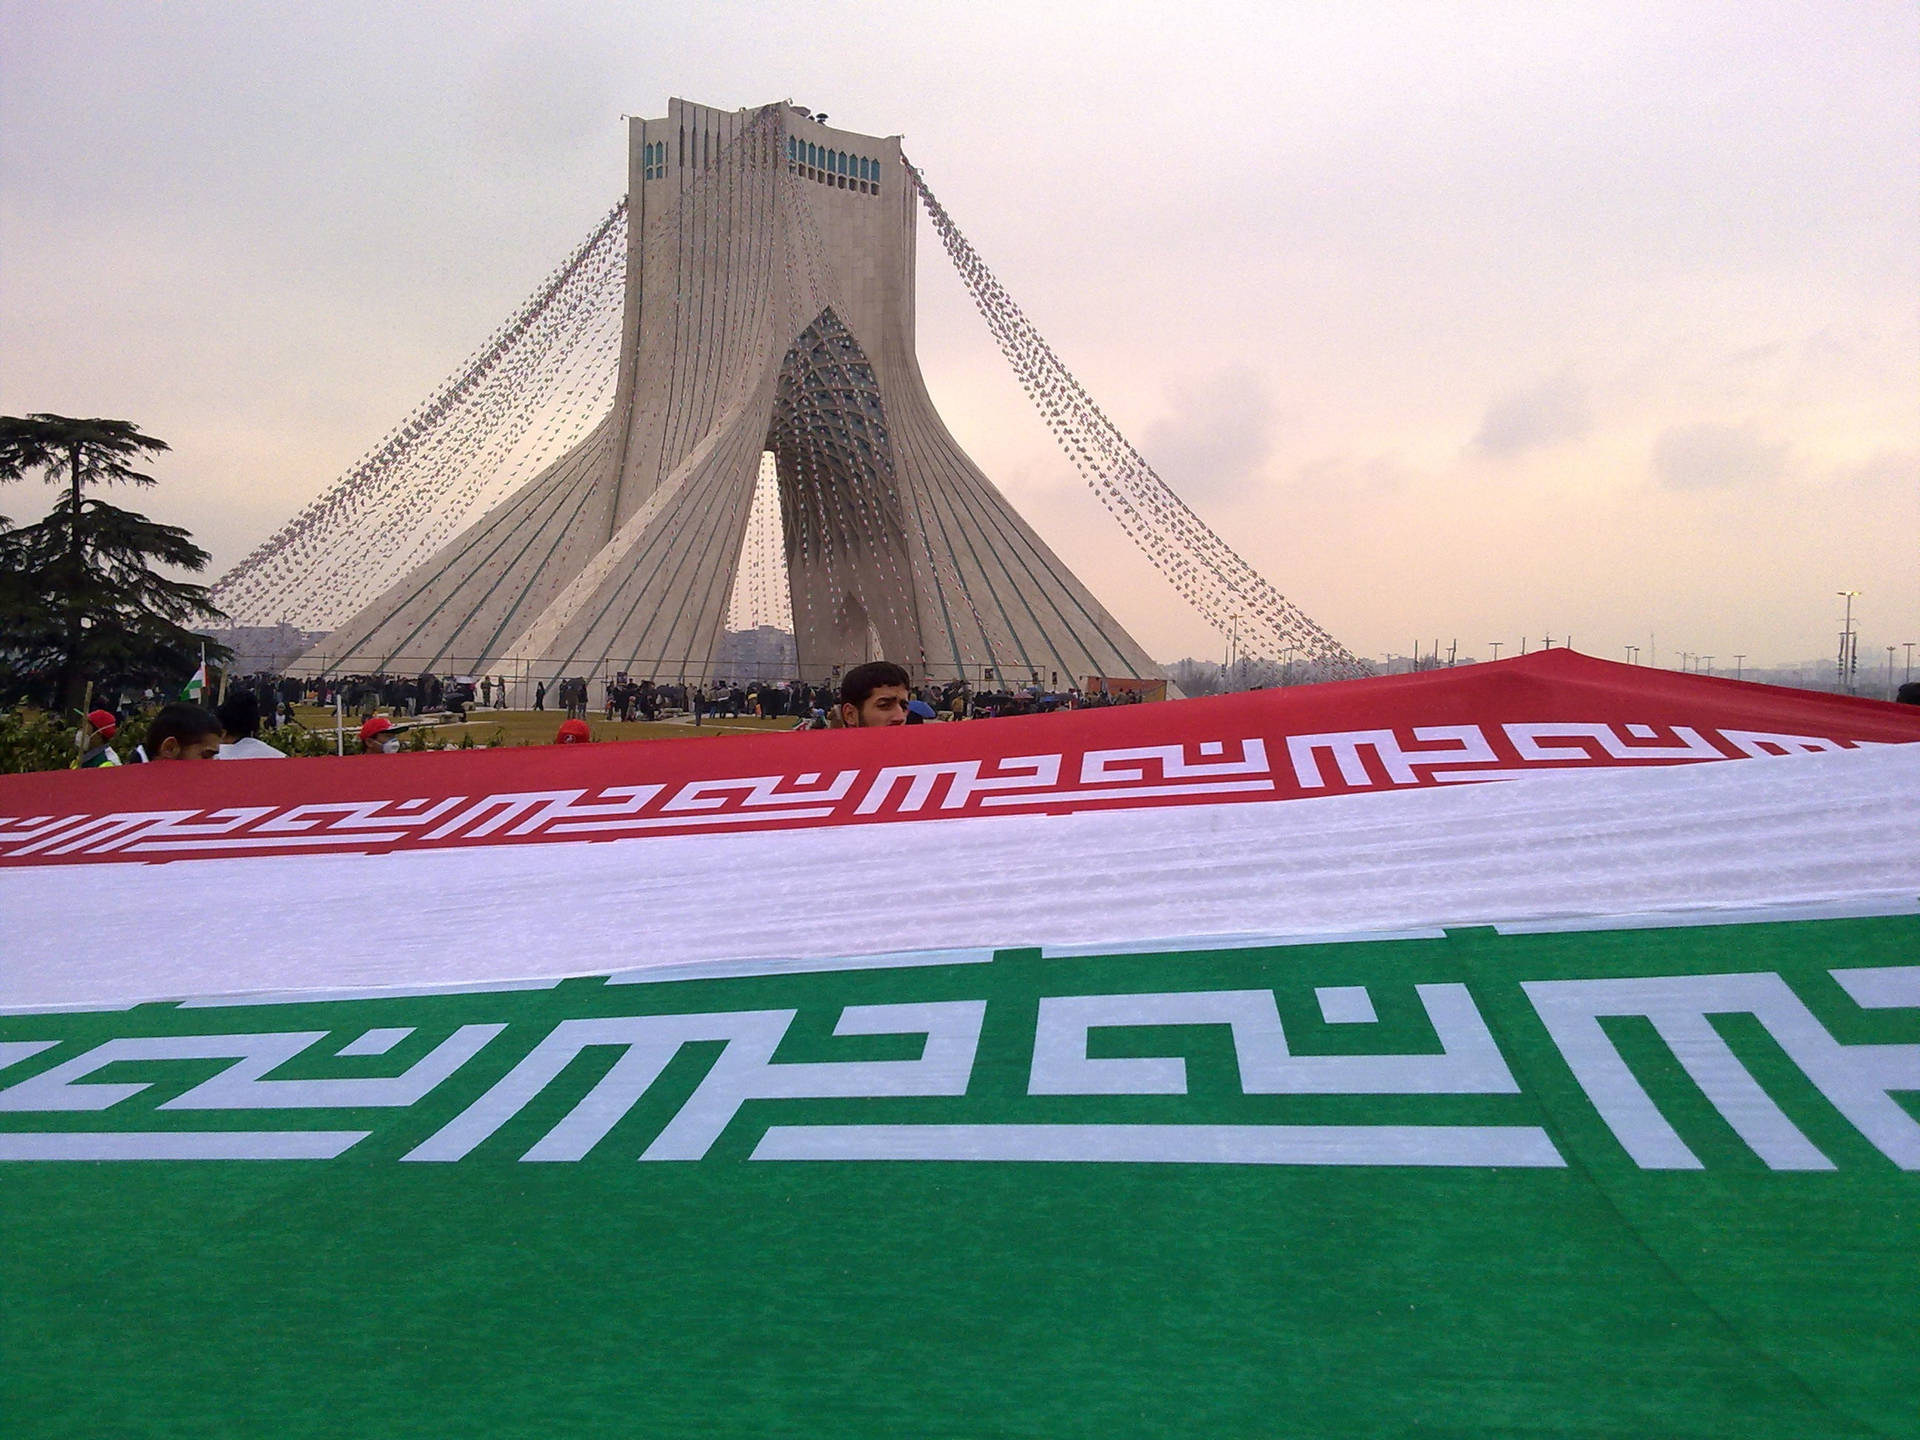 Tehraniran Flag Would Be Translated As 